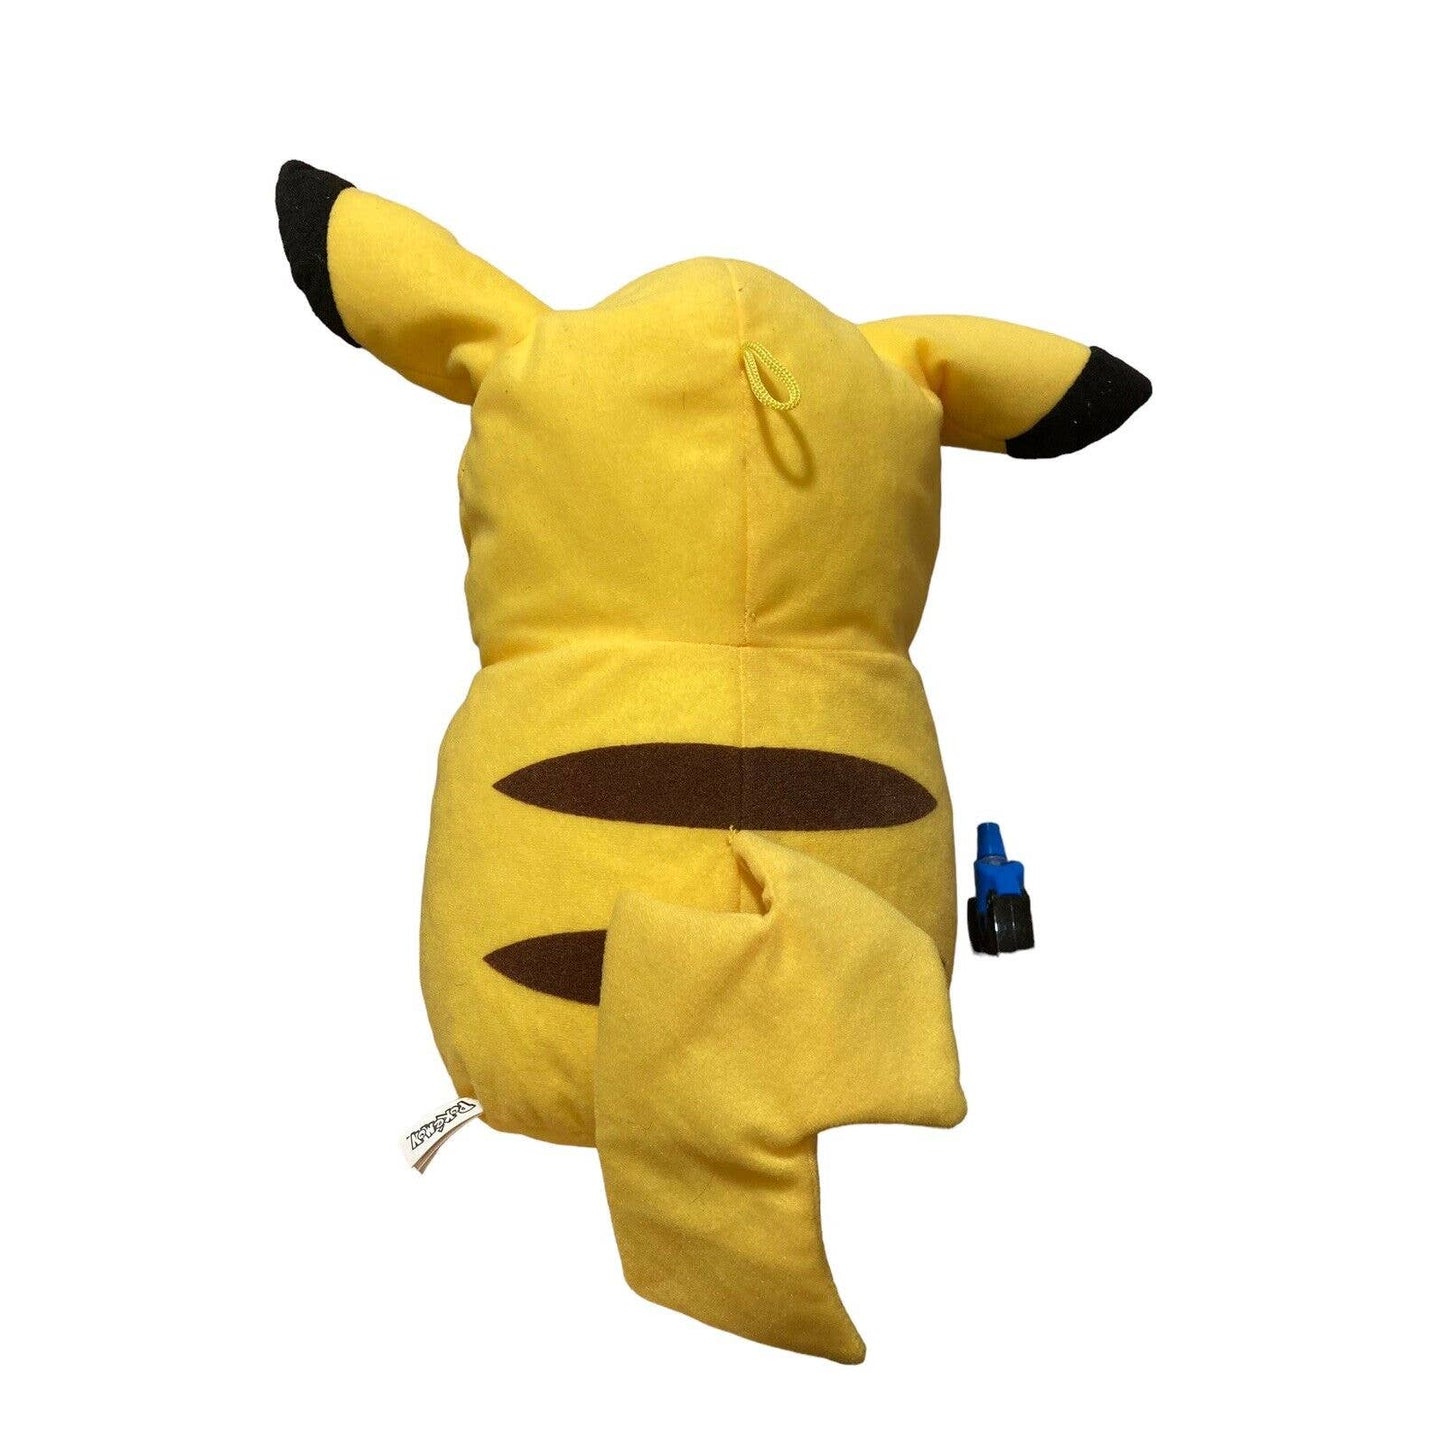 Toy Factory Nintendo Pokémon Pikachu 14” Stuffed Plush Toy Doll Bean Bag